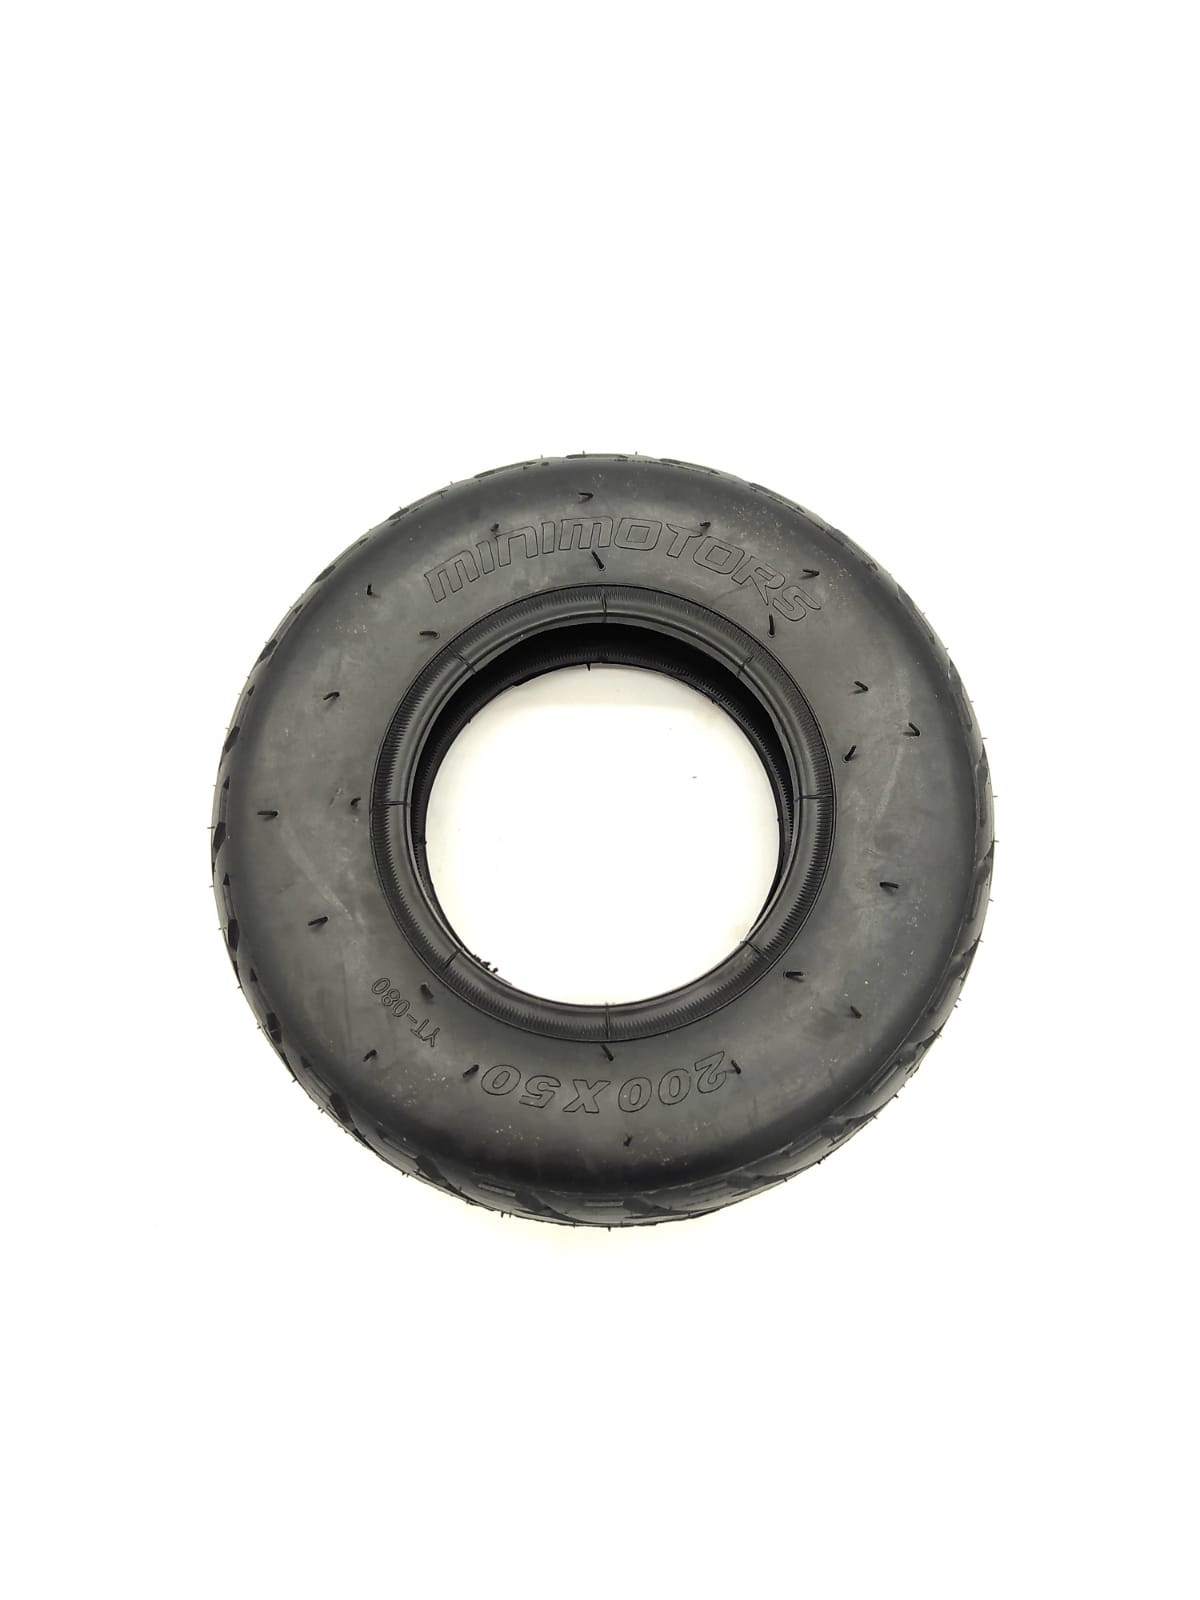 Photo of 200x50 Futecher Front Tire spare part